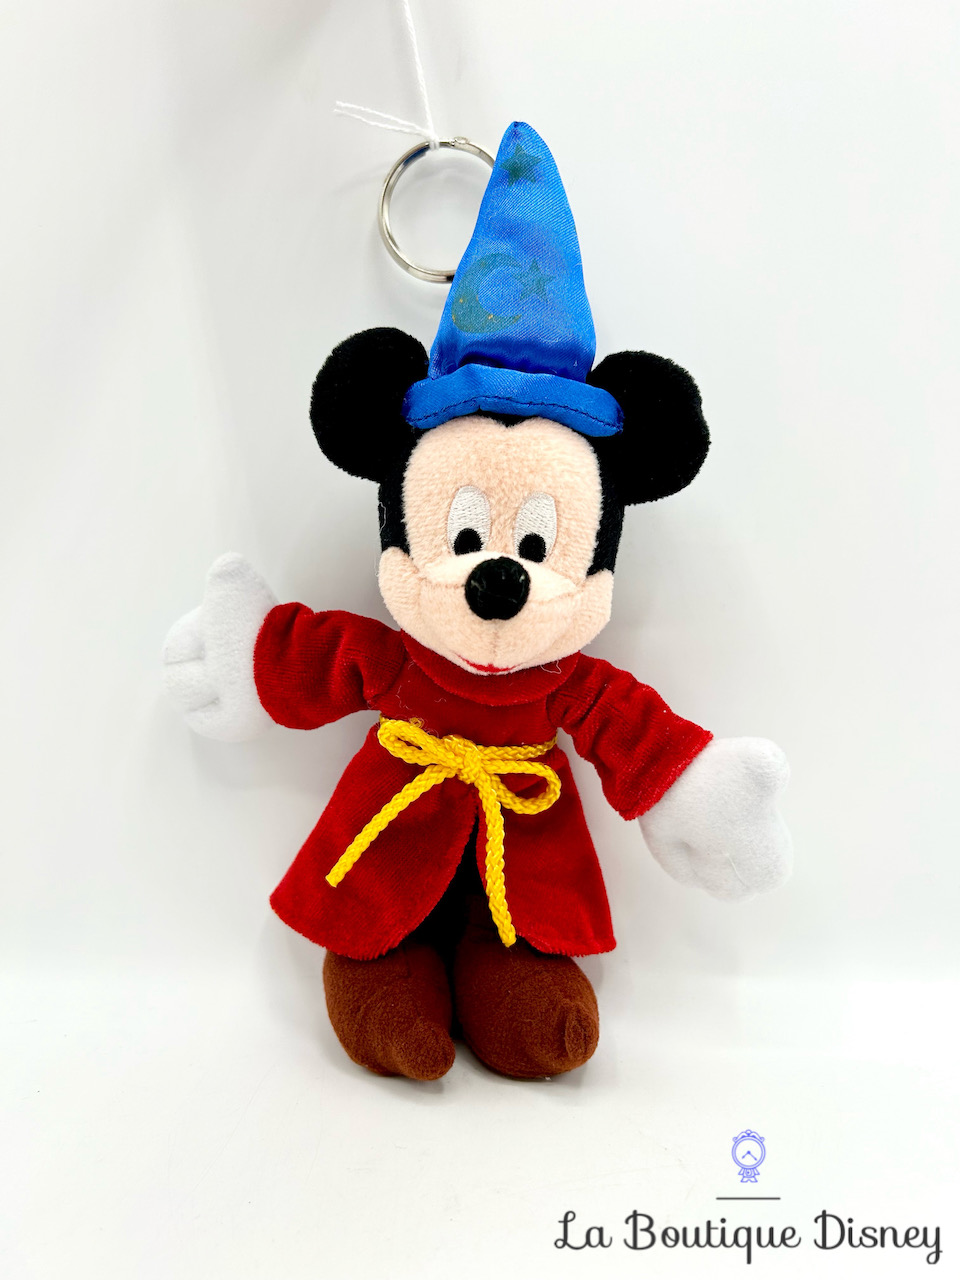 Porte clés Mickey Mouse Fantasia peluche Disneyland Paris Disney